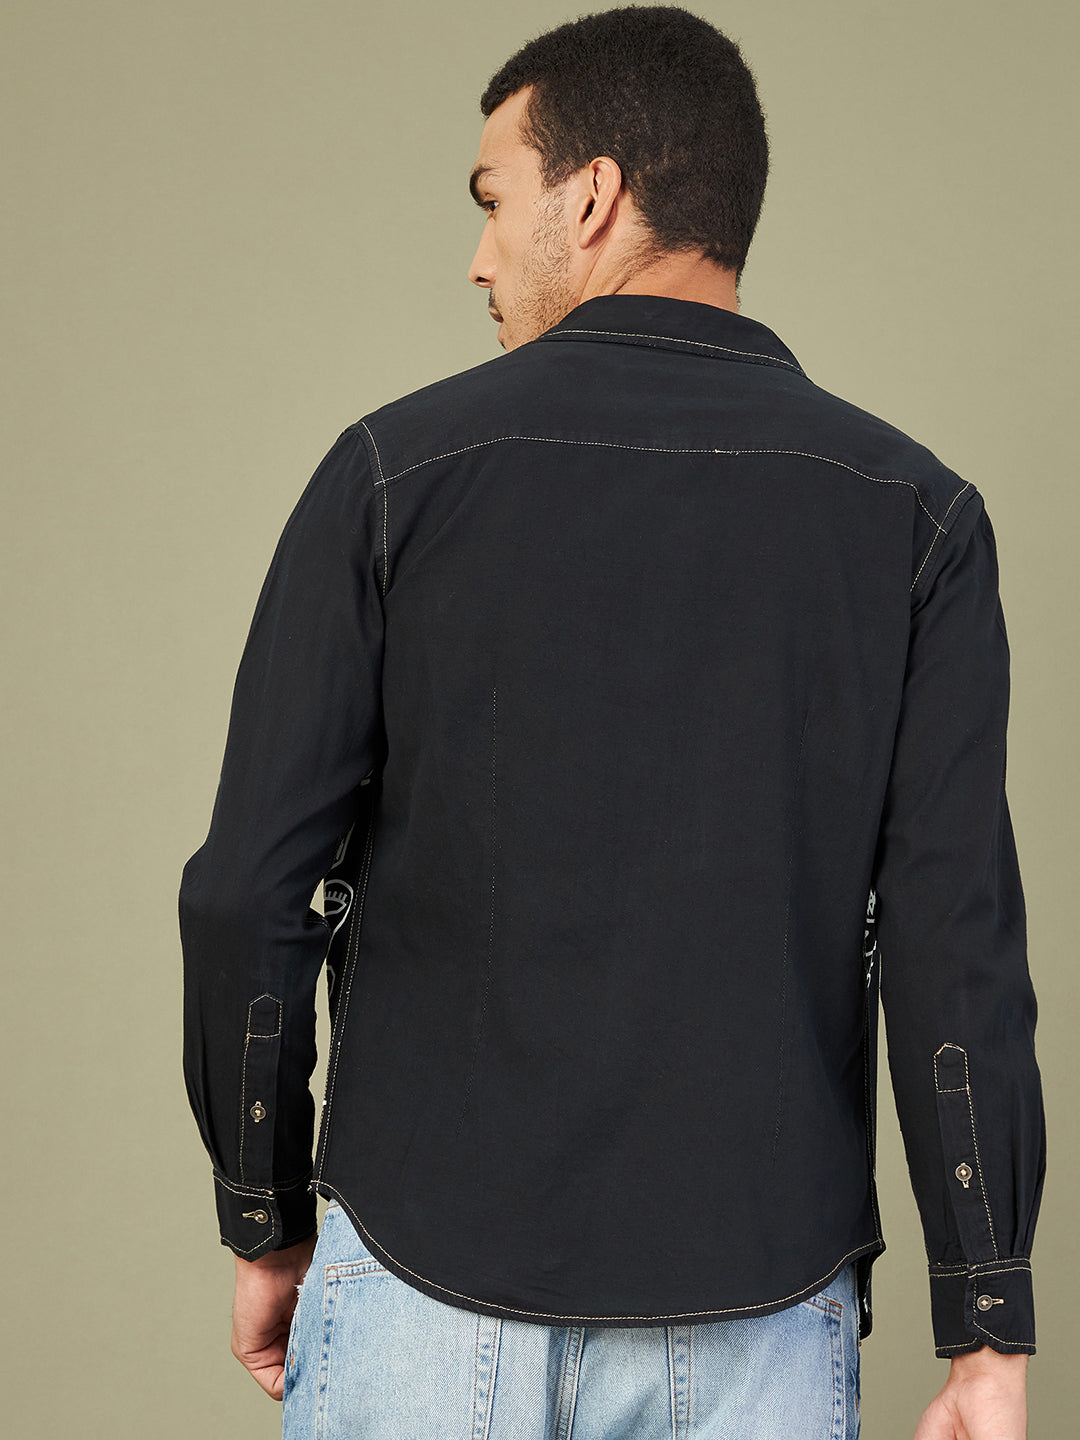 Buy Lyush - Mascln Men's Black Washed Denim Jacket Online at Best Price